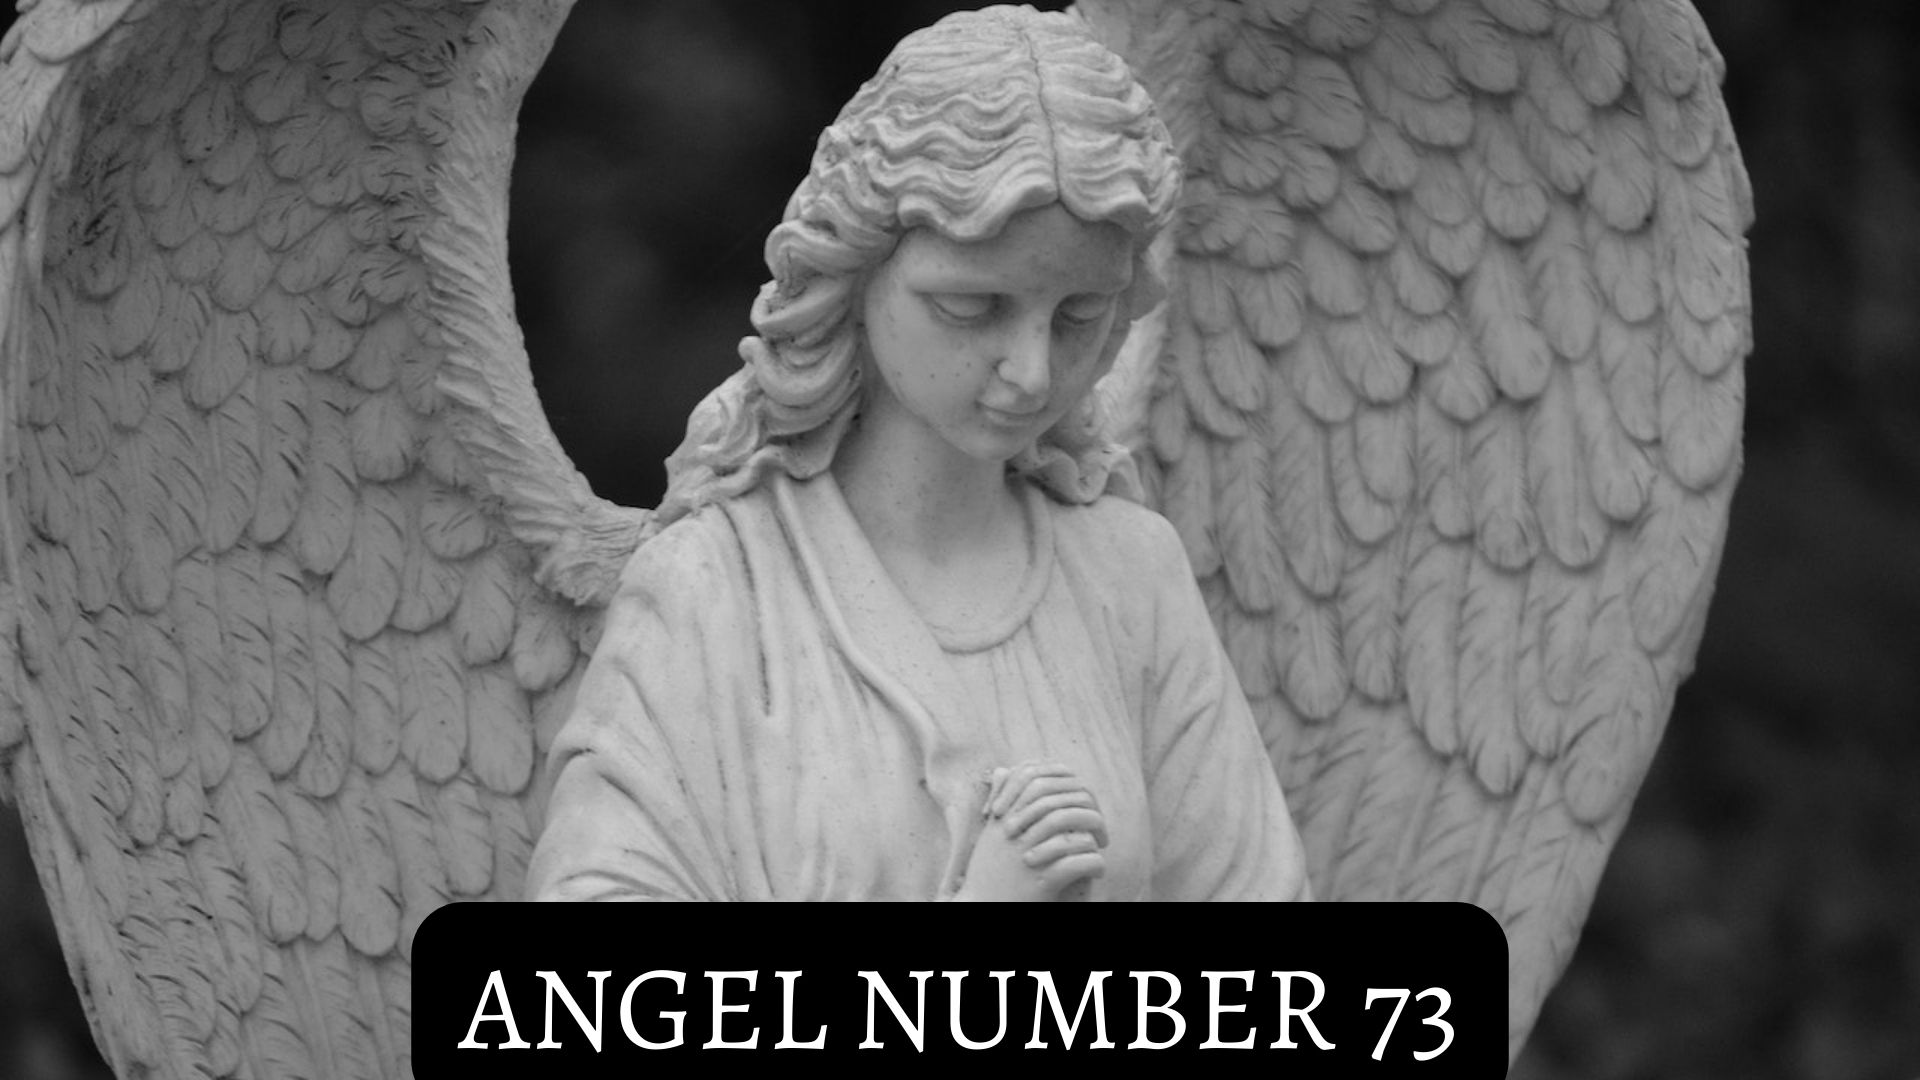 Angel Number 73 Symbolism - Enjoy Your Life To The Fullest